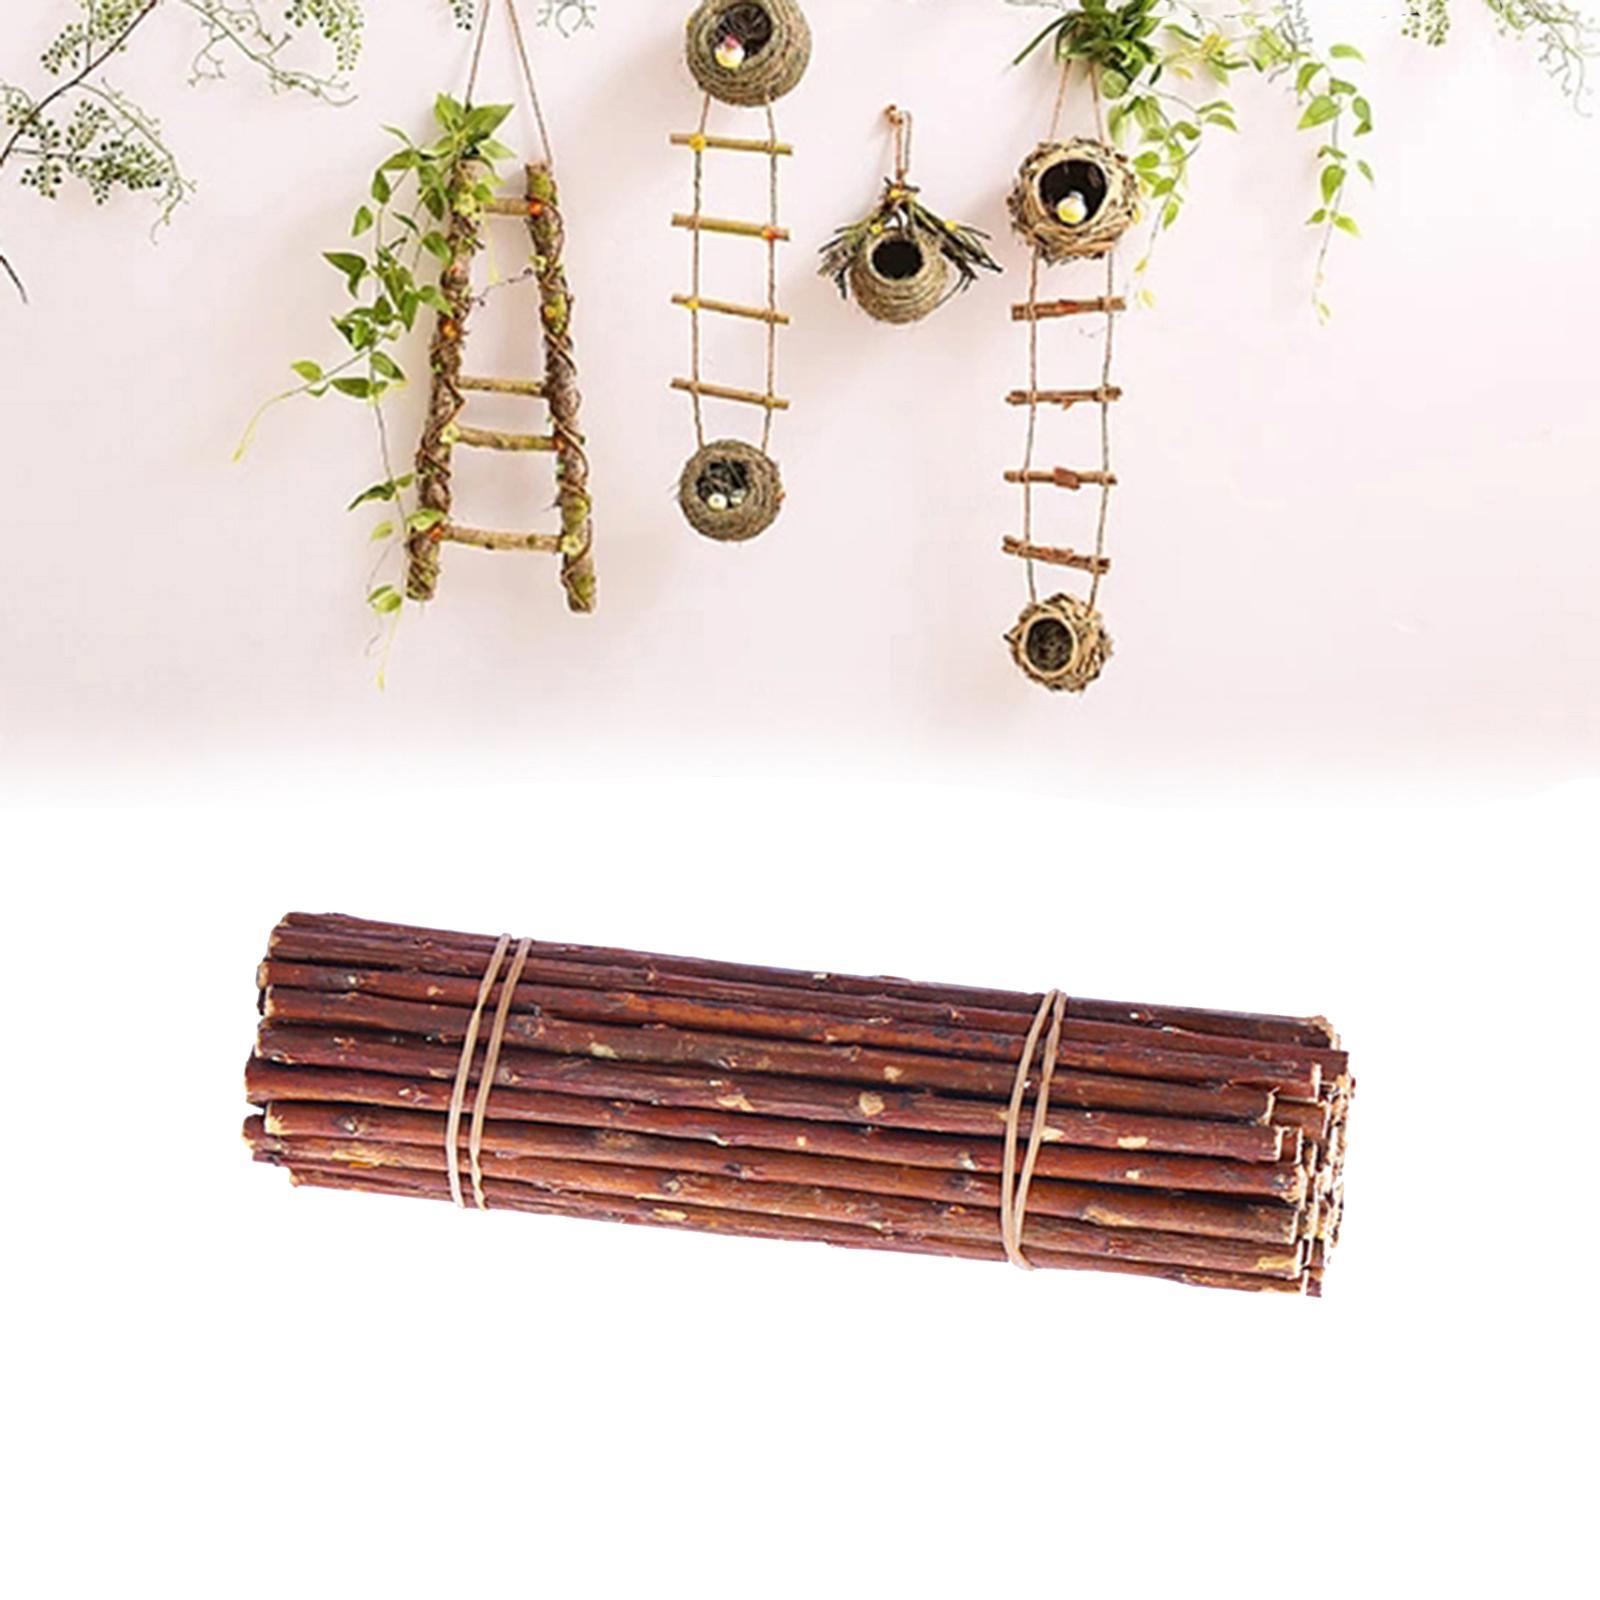 50pcs Wood Sticks for Crafts,  Sticks, Wood Log Sticks, Craft Twigs Sticks for DIY Crafts Photo Props Art Projects